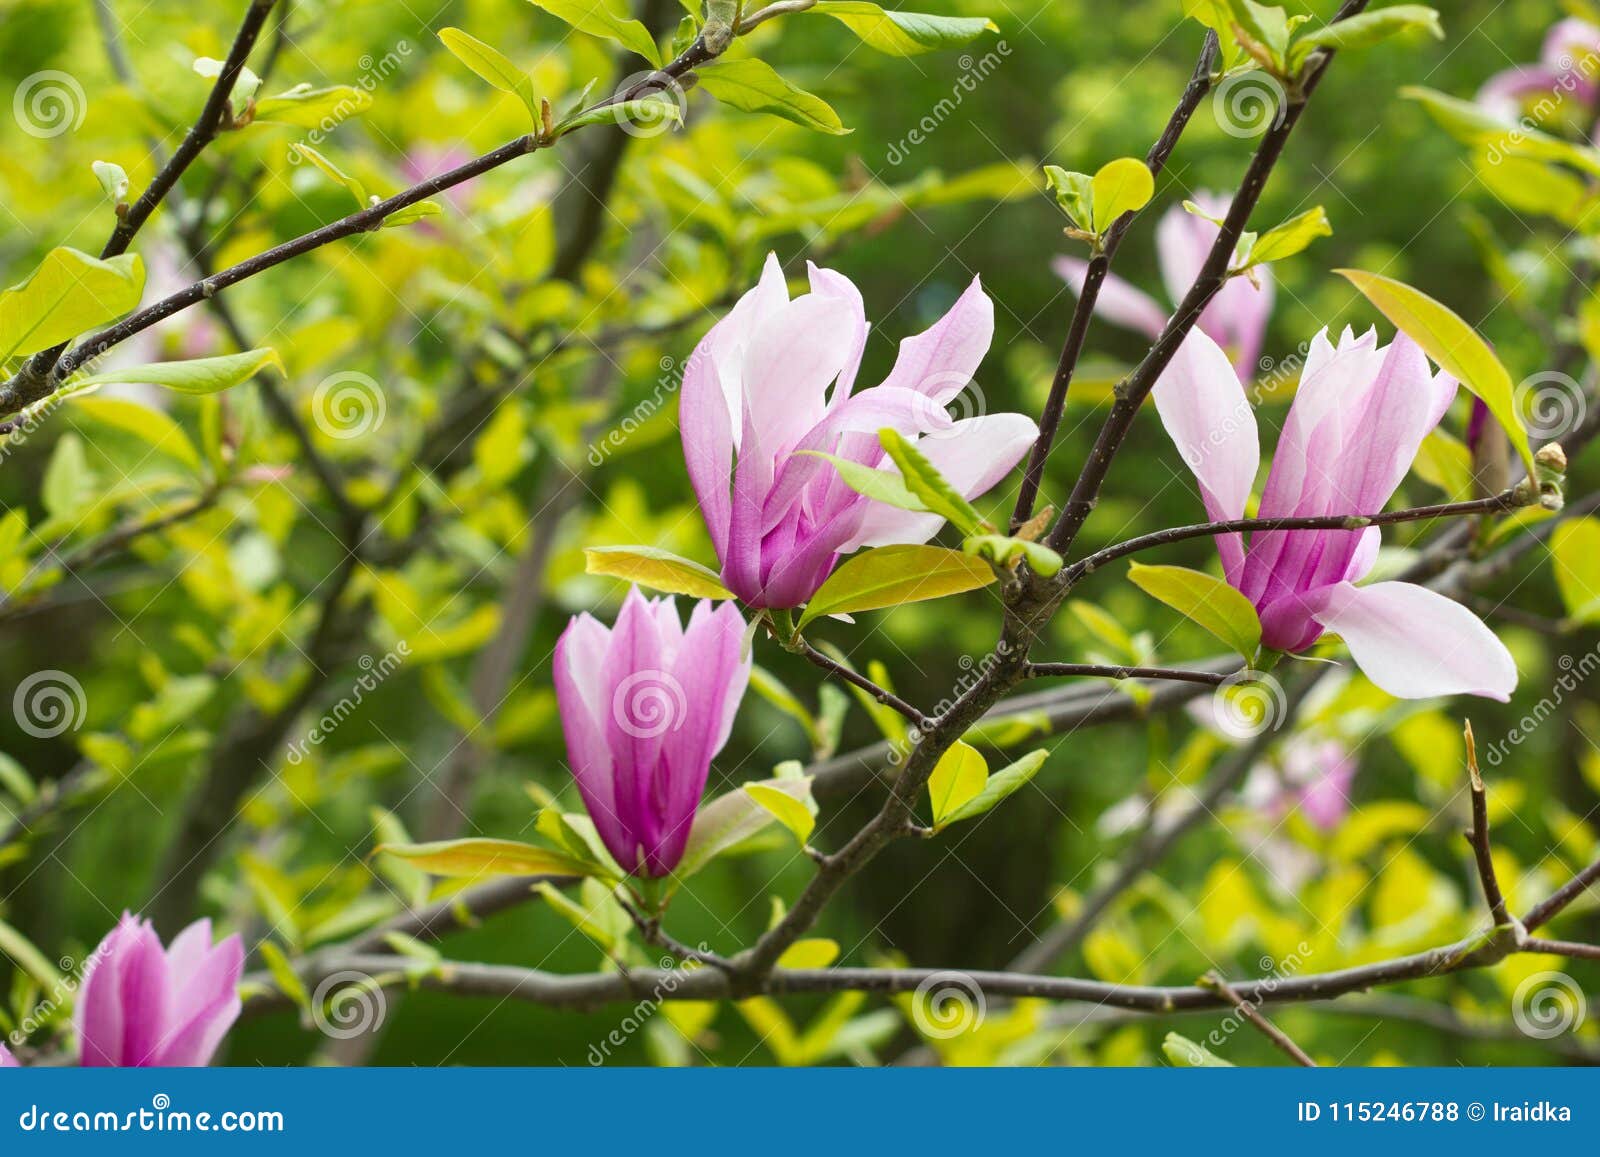 Flowering Magnolia Tulip Tree. Stock Photo - Image of flower, gardening ...